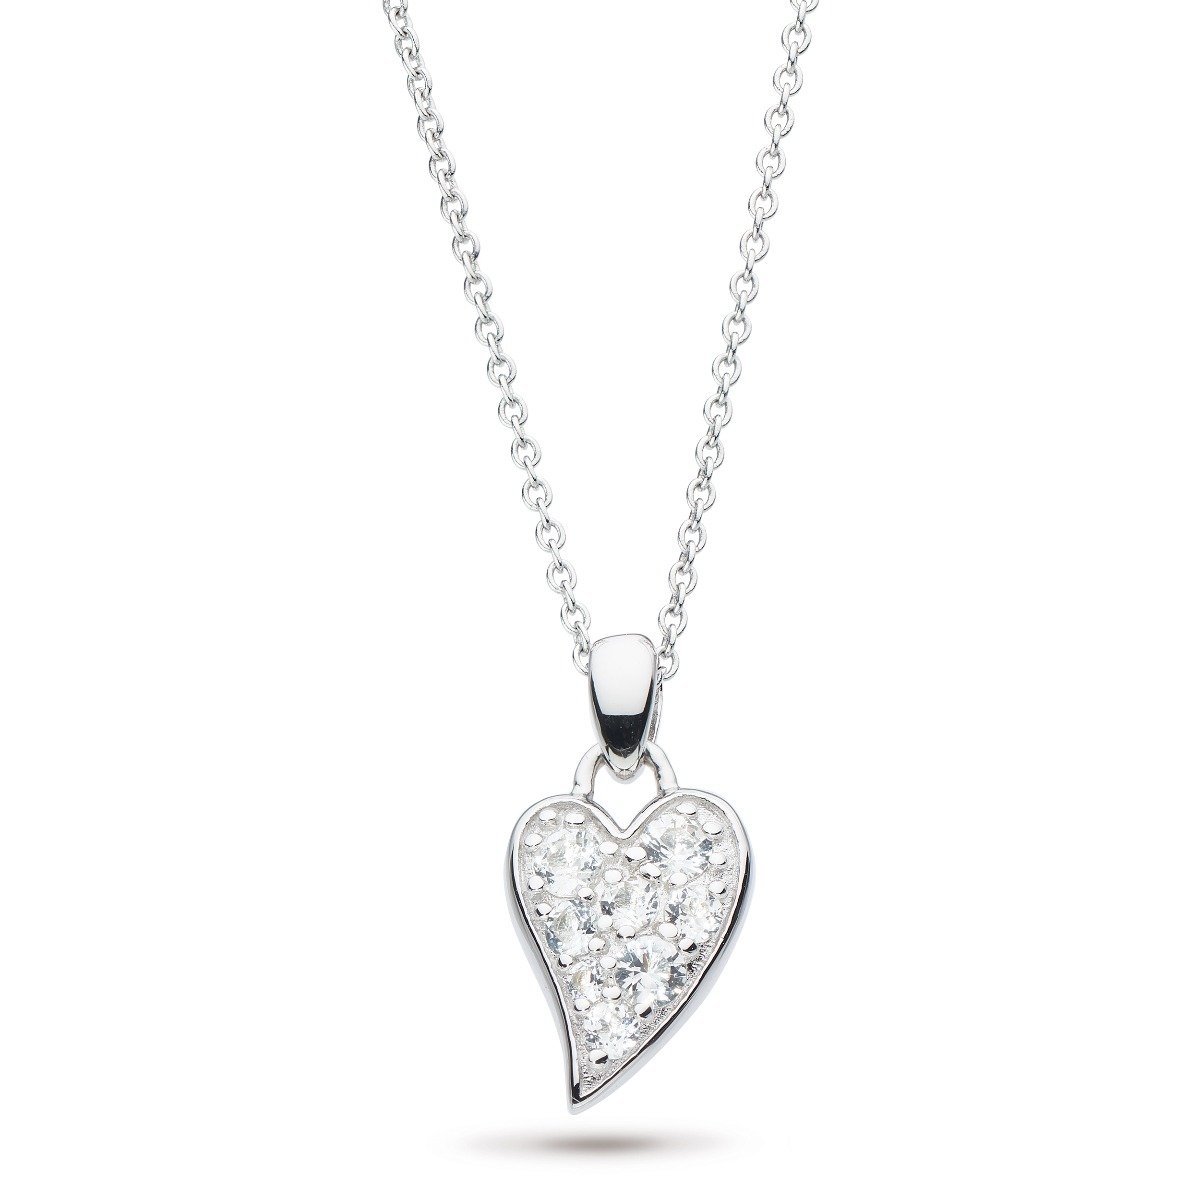 Kit Heath Desire Precious White Topaz Small Heart Necklace KH90505WT